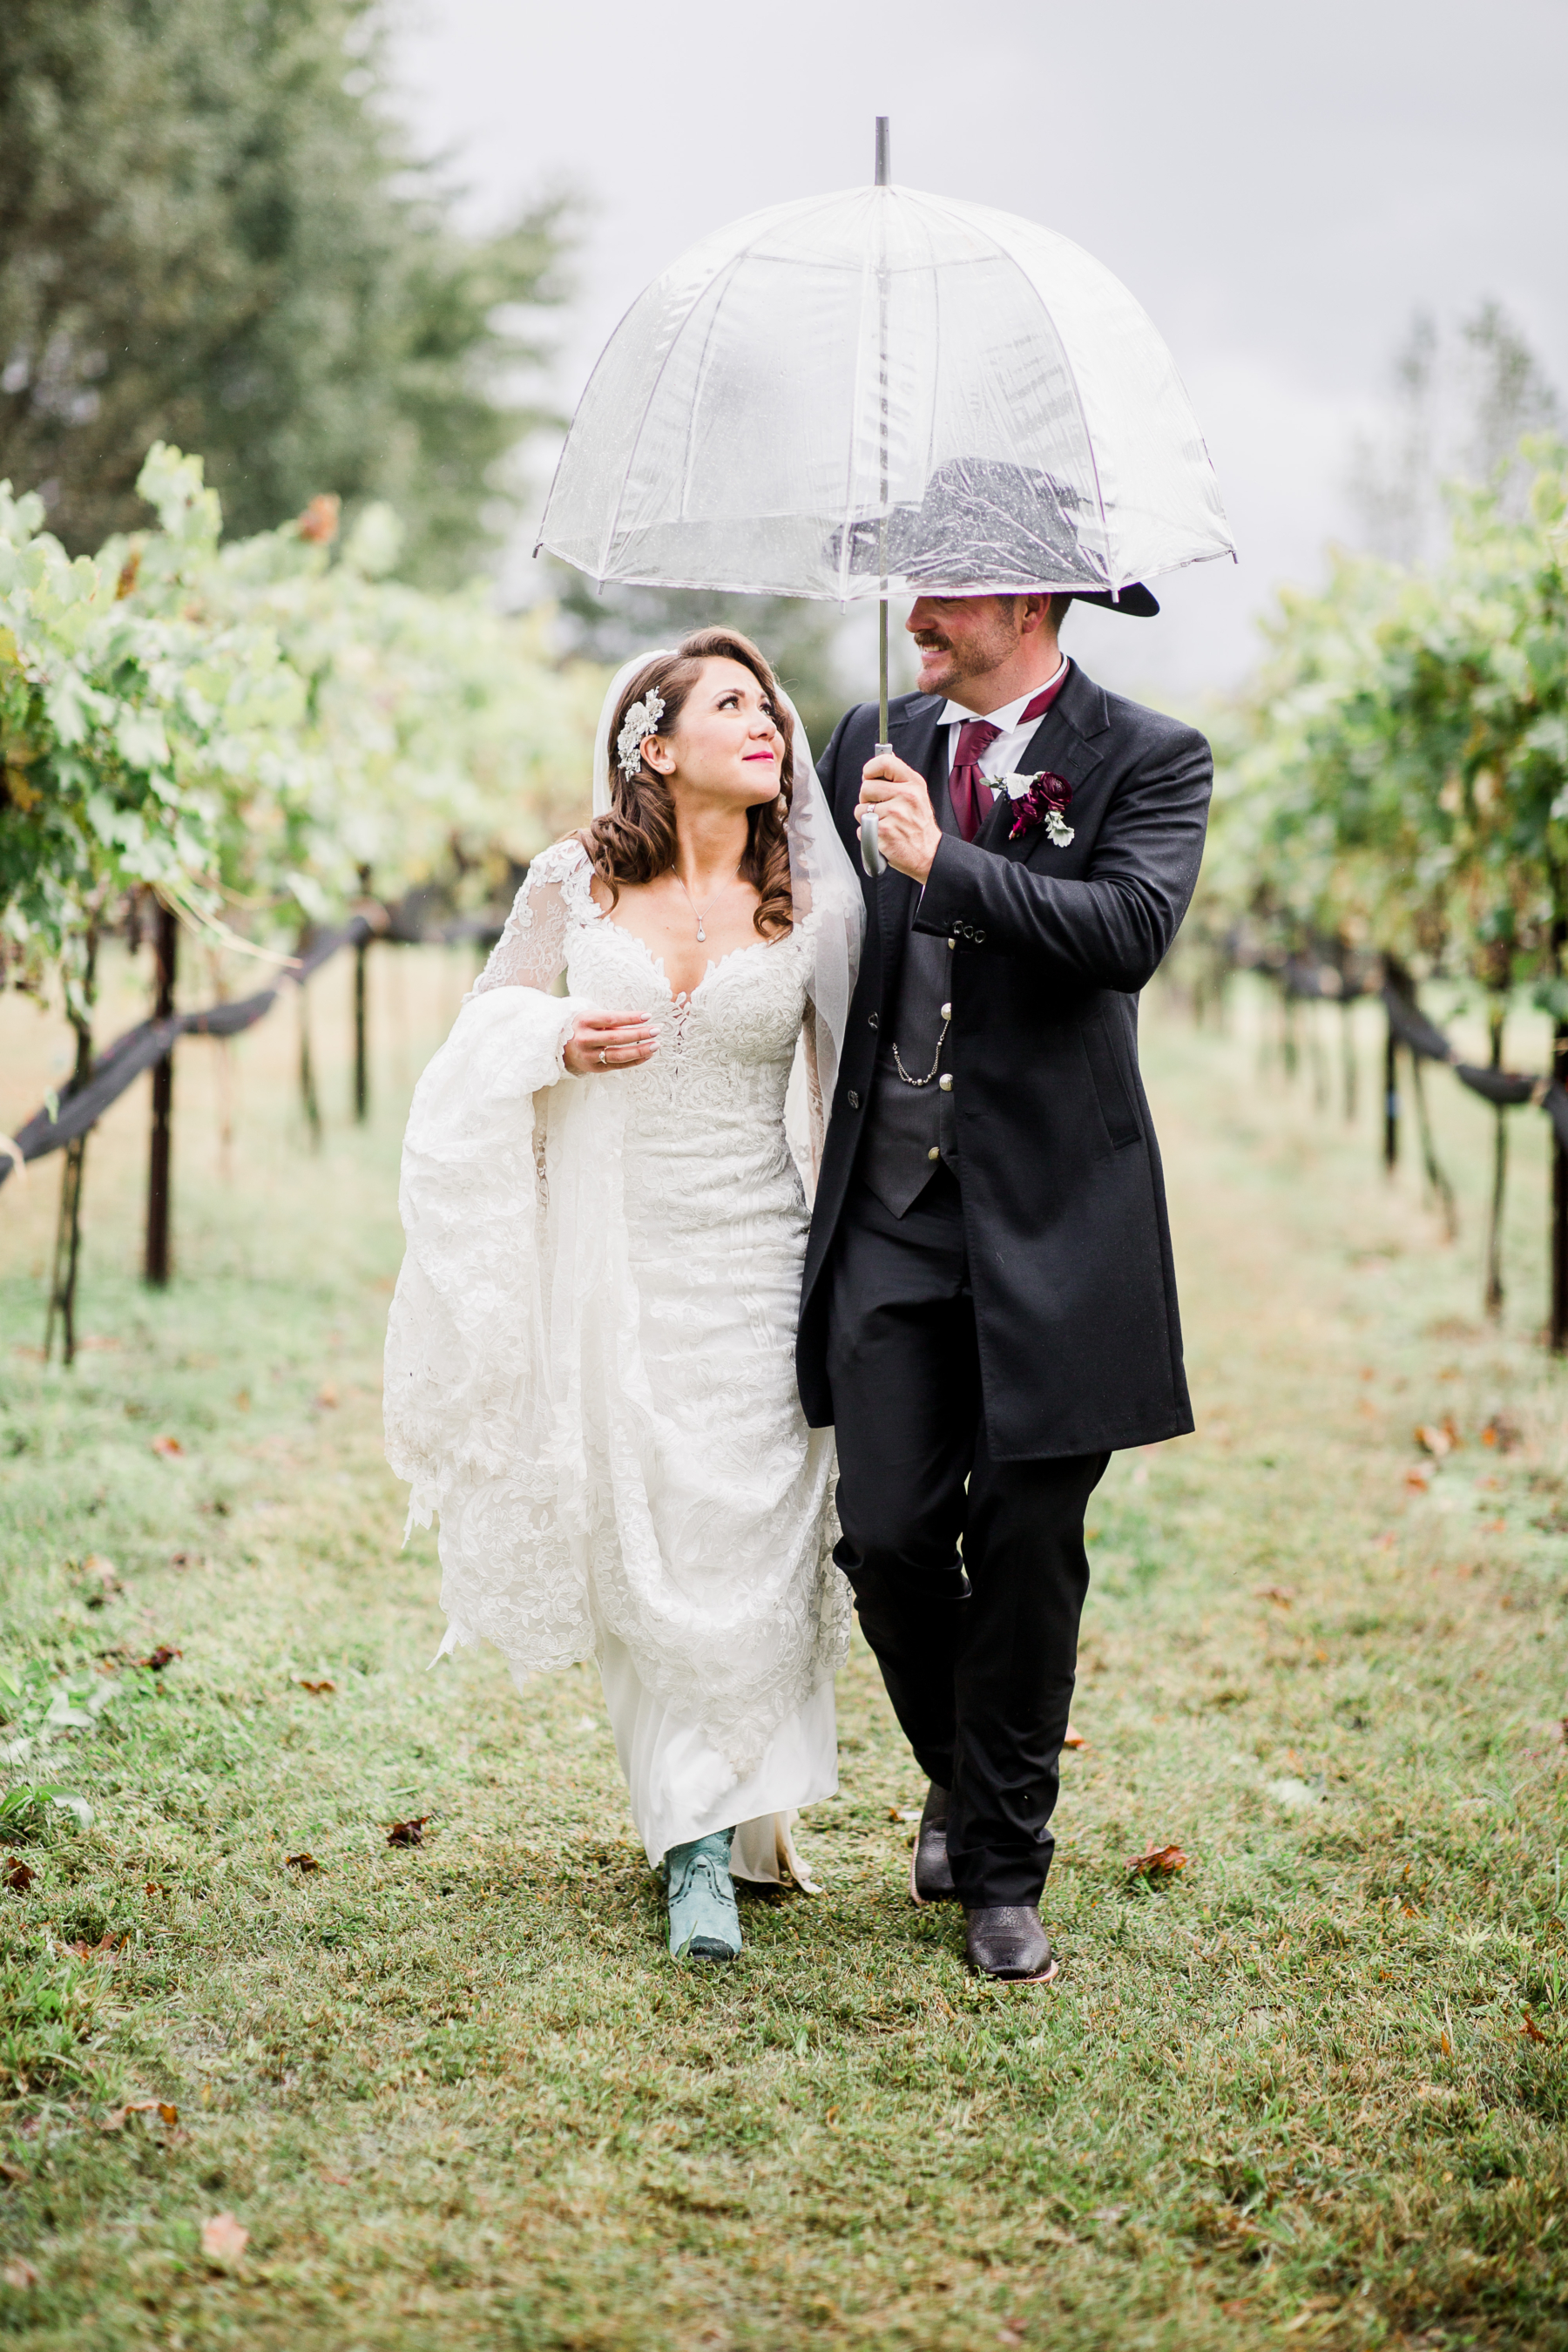 Rainy day wedding ceremony